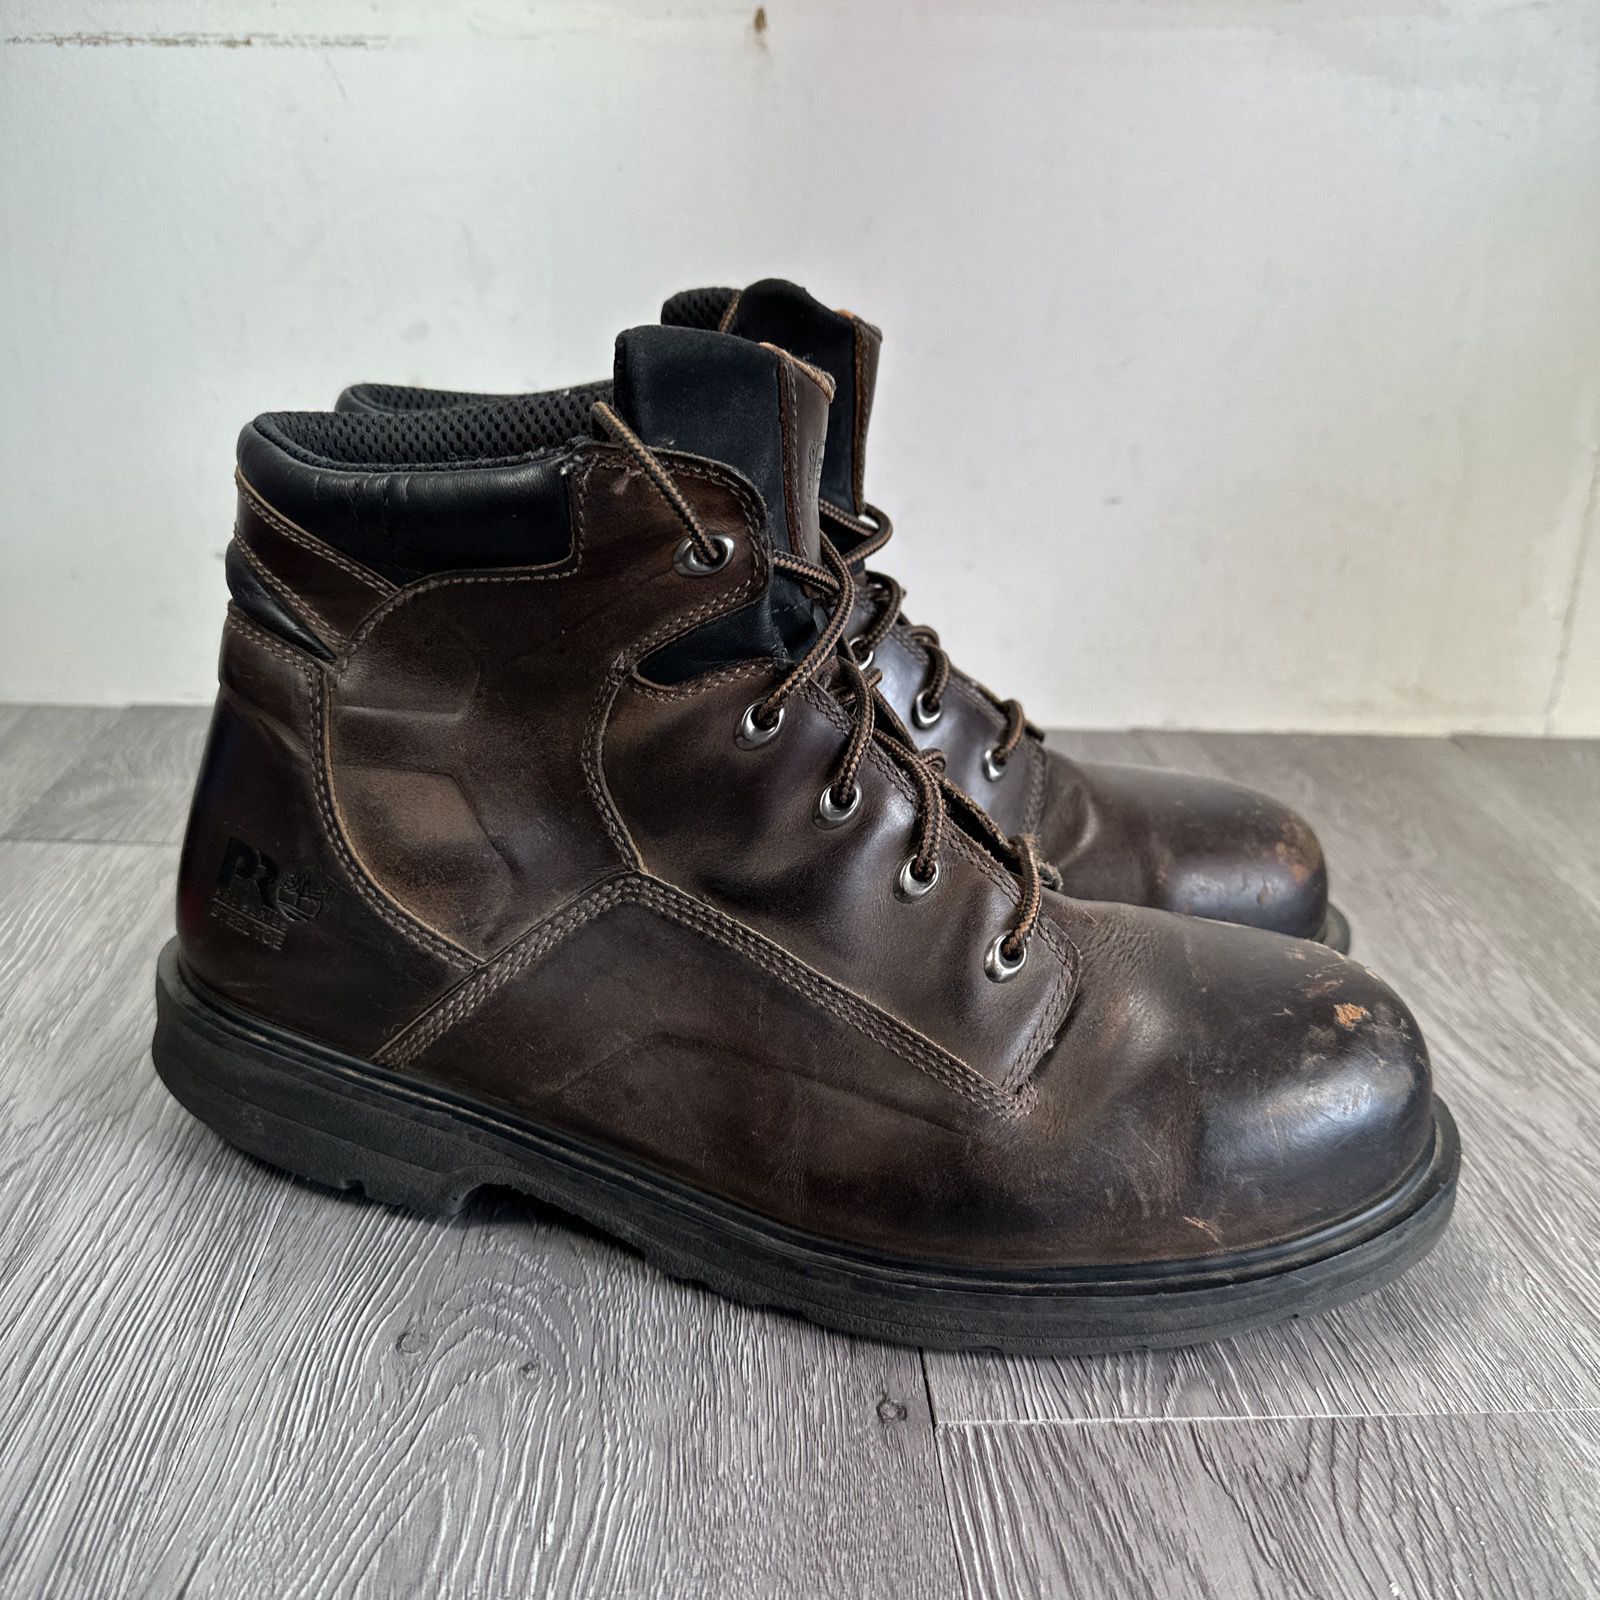 Timberland PRO Men's 6" Magnus Steel Toe Work Boots 85591 Brown 13M